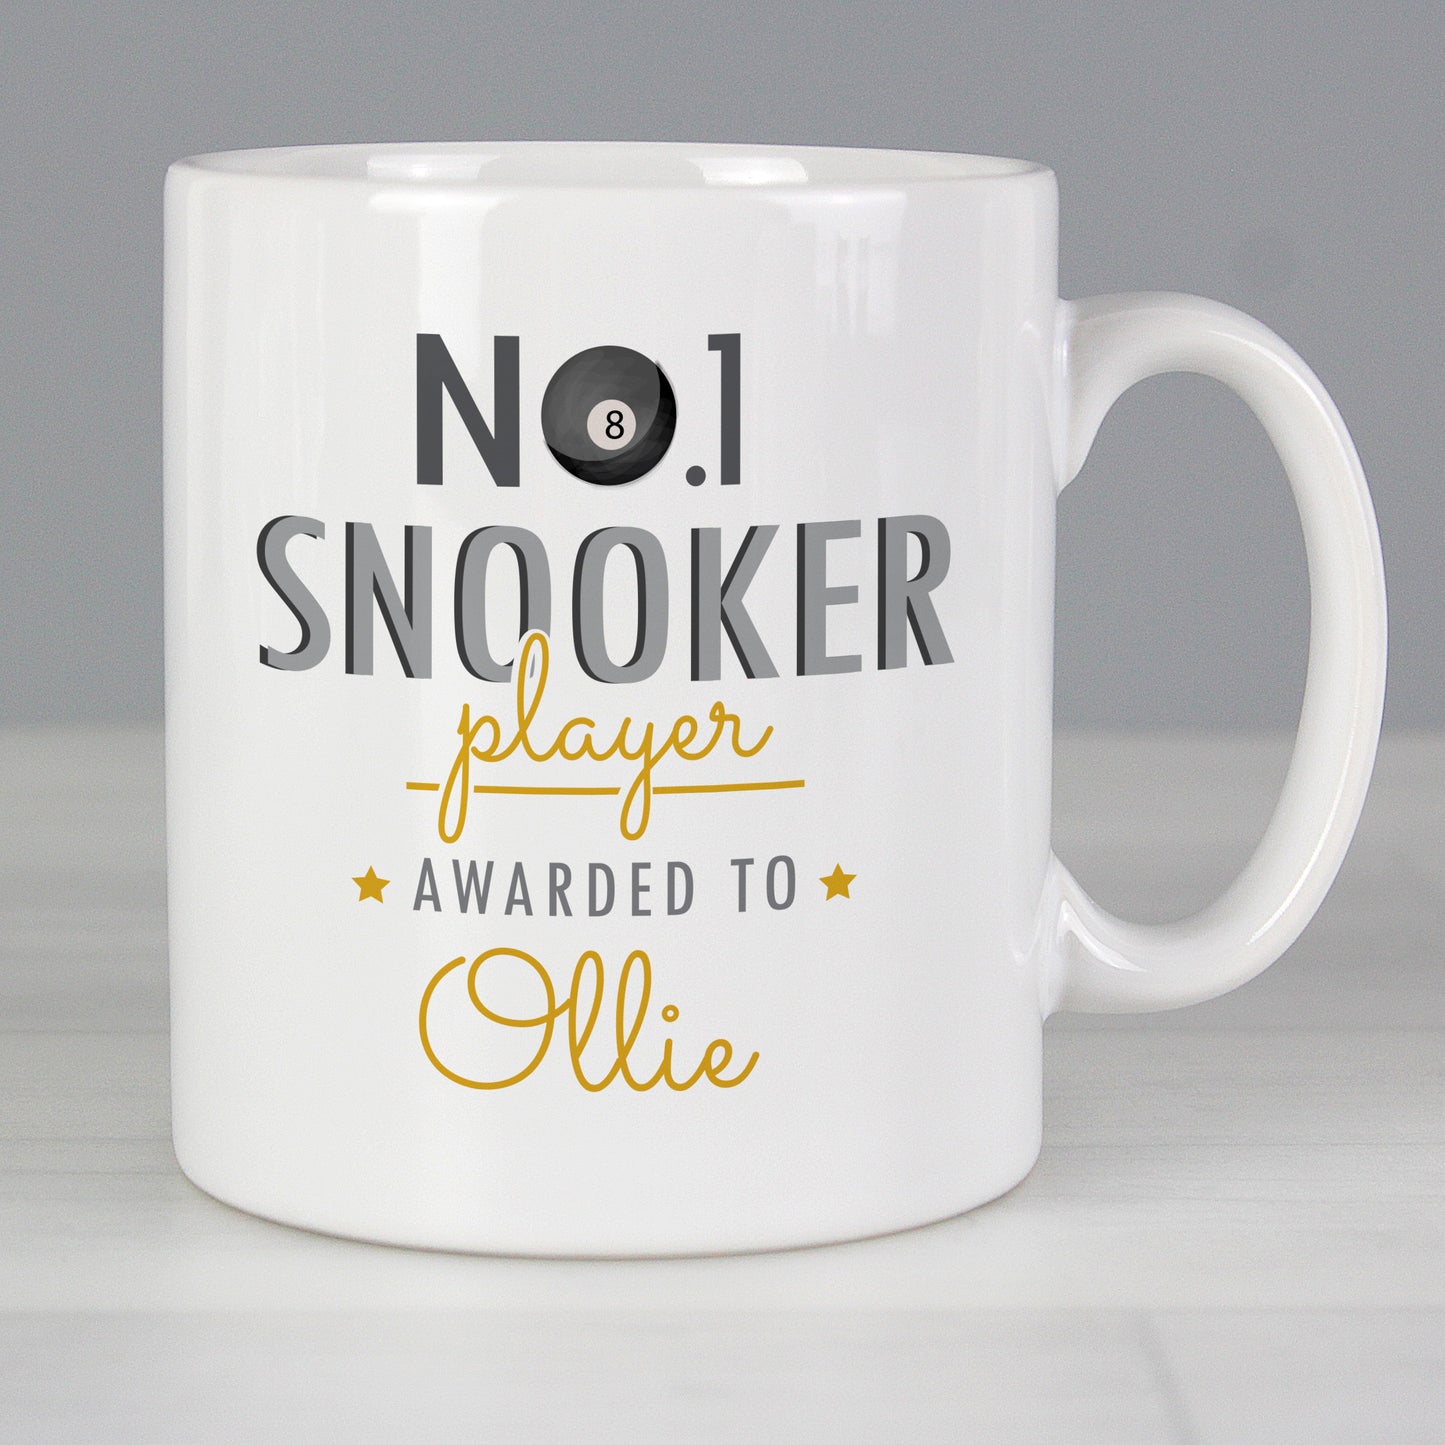 Personalised No.1 Snooker Player Mug - Personalise It!